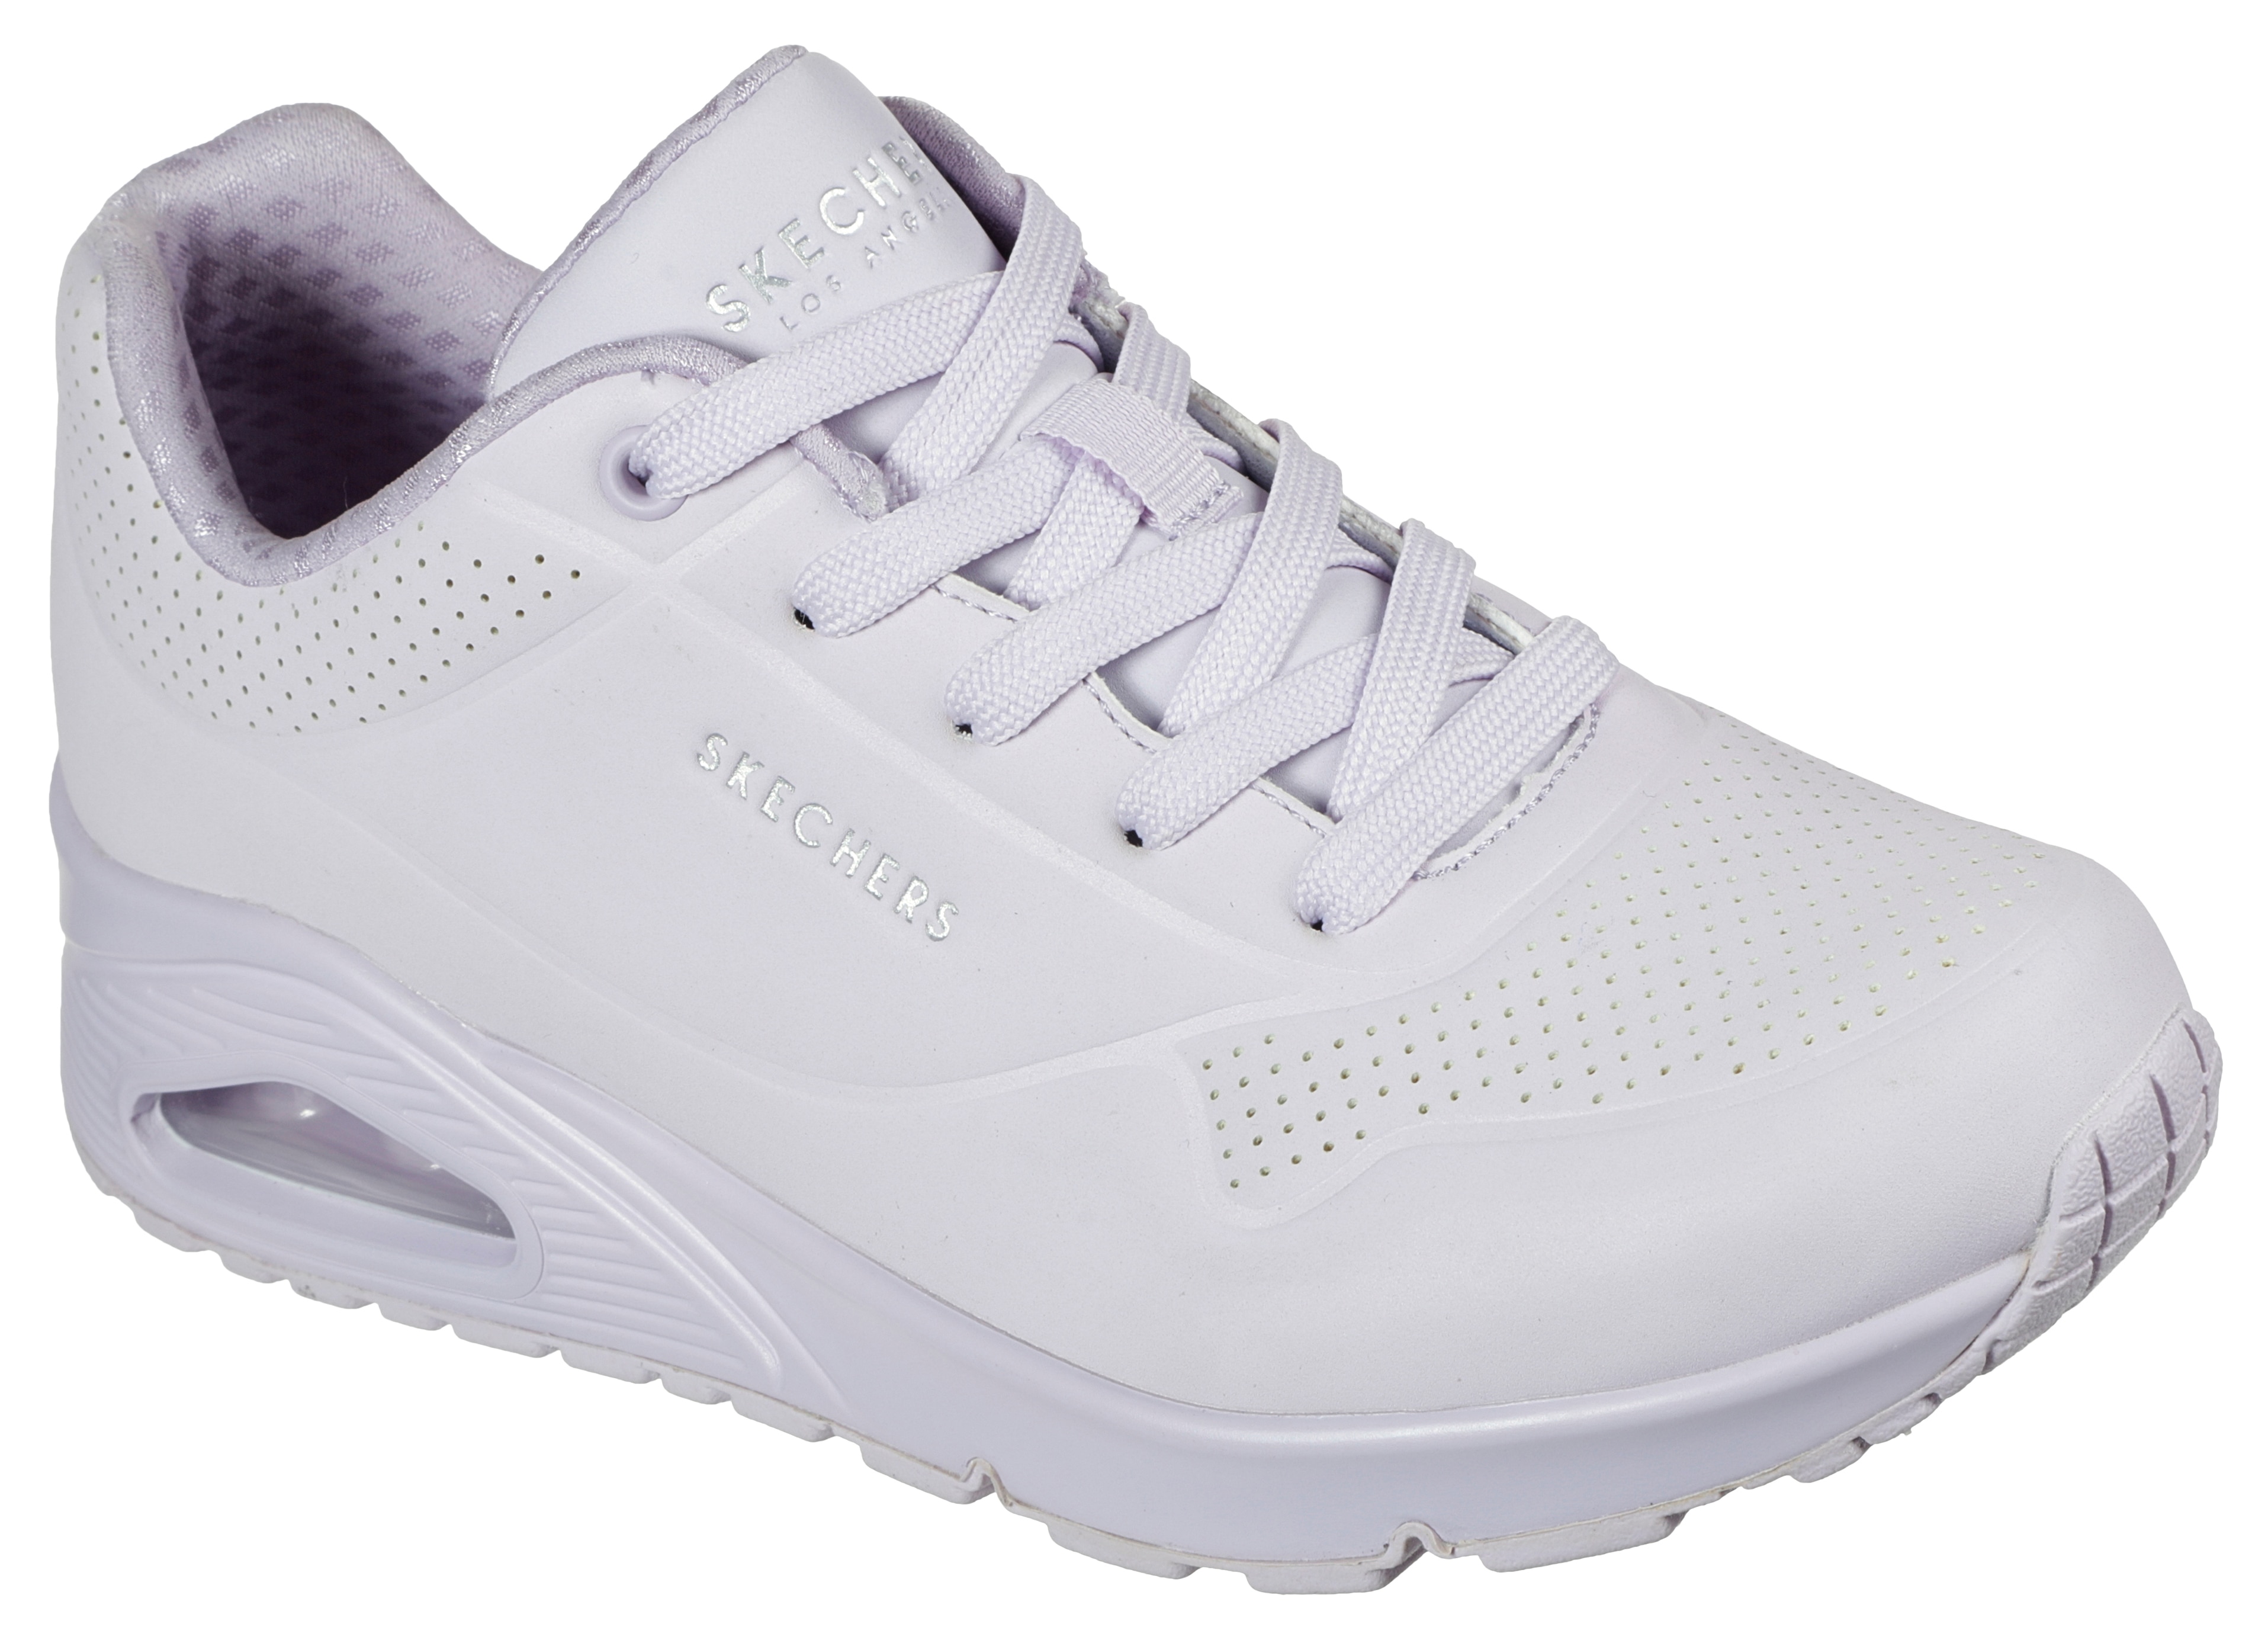 sketcher tennis shoes on sale